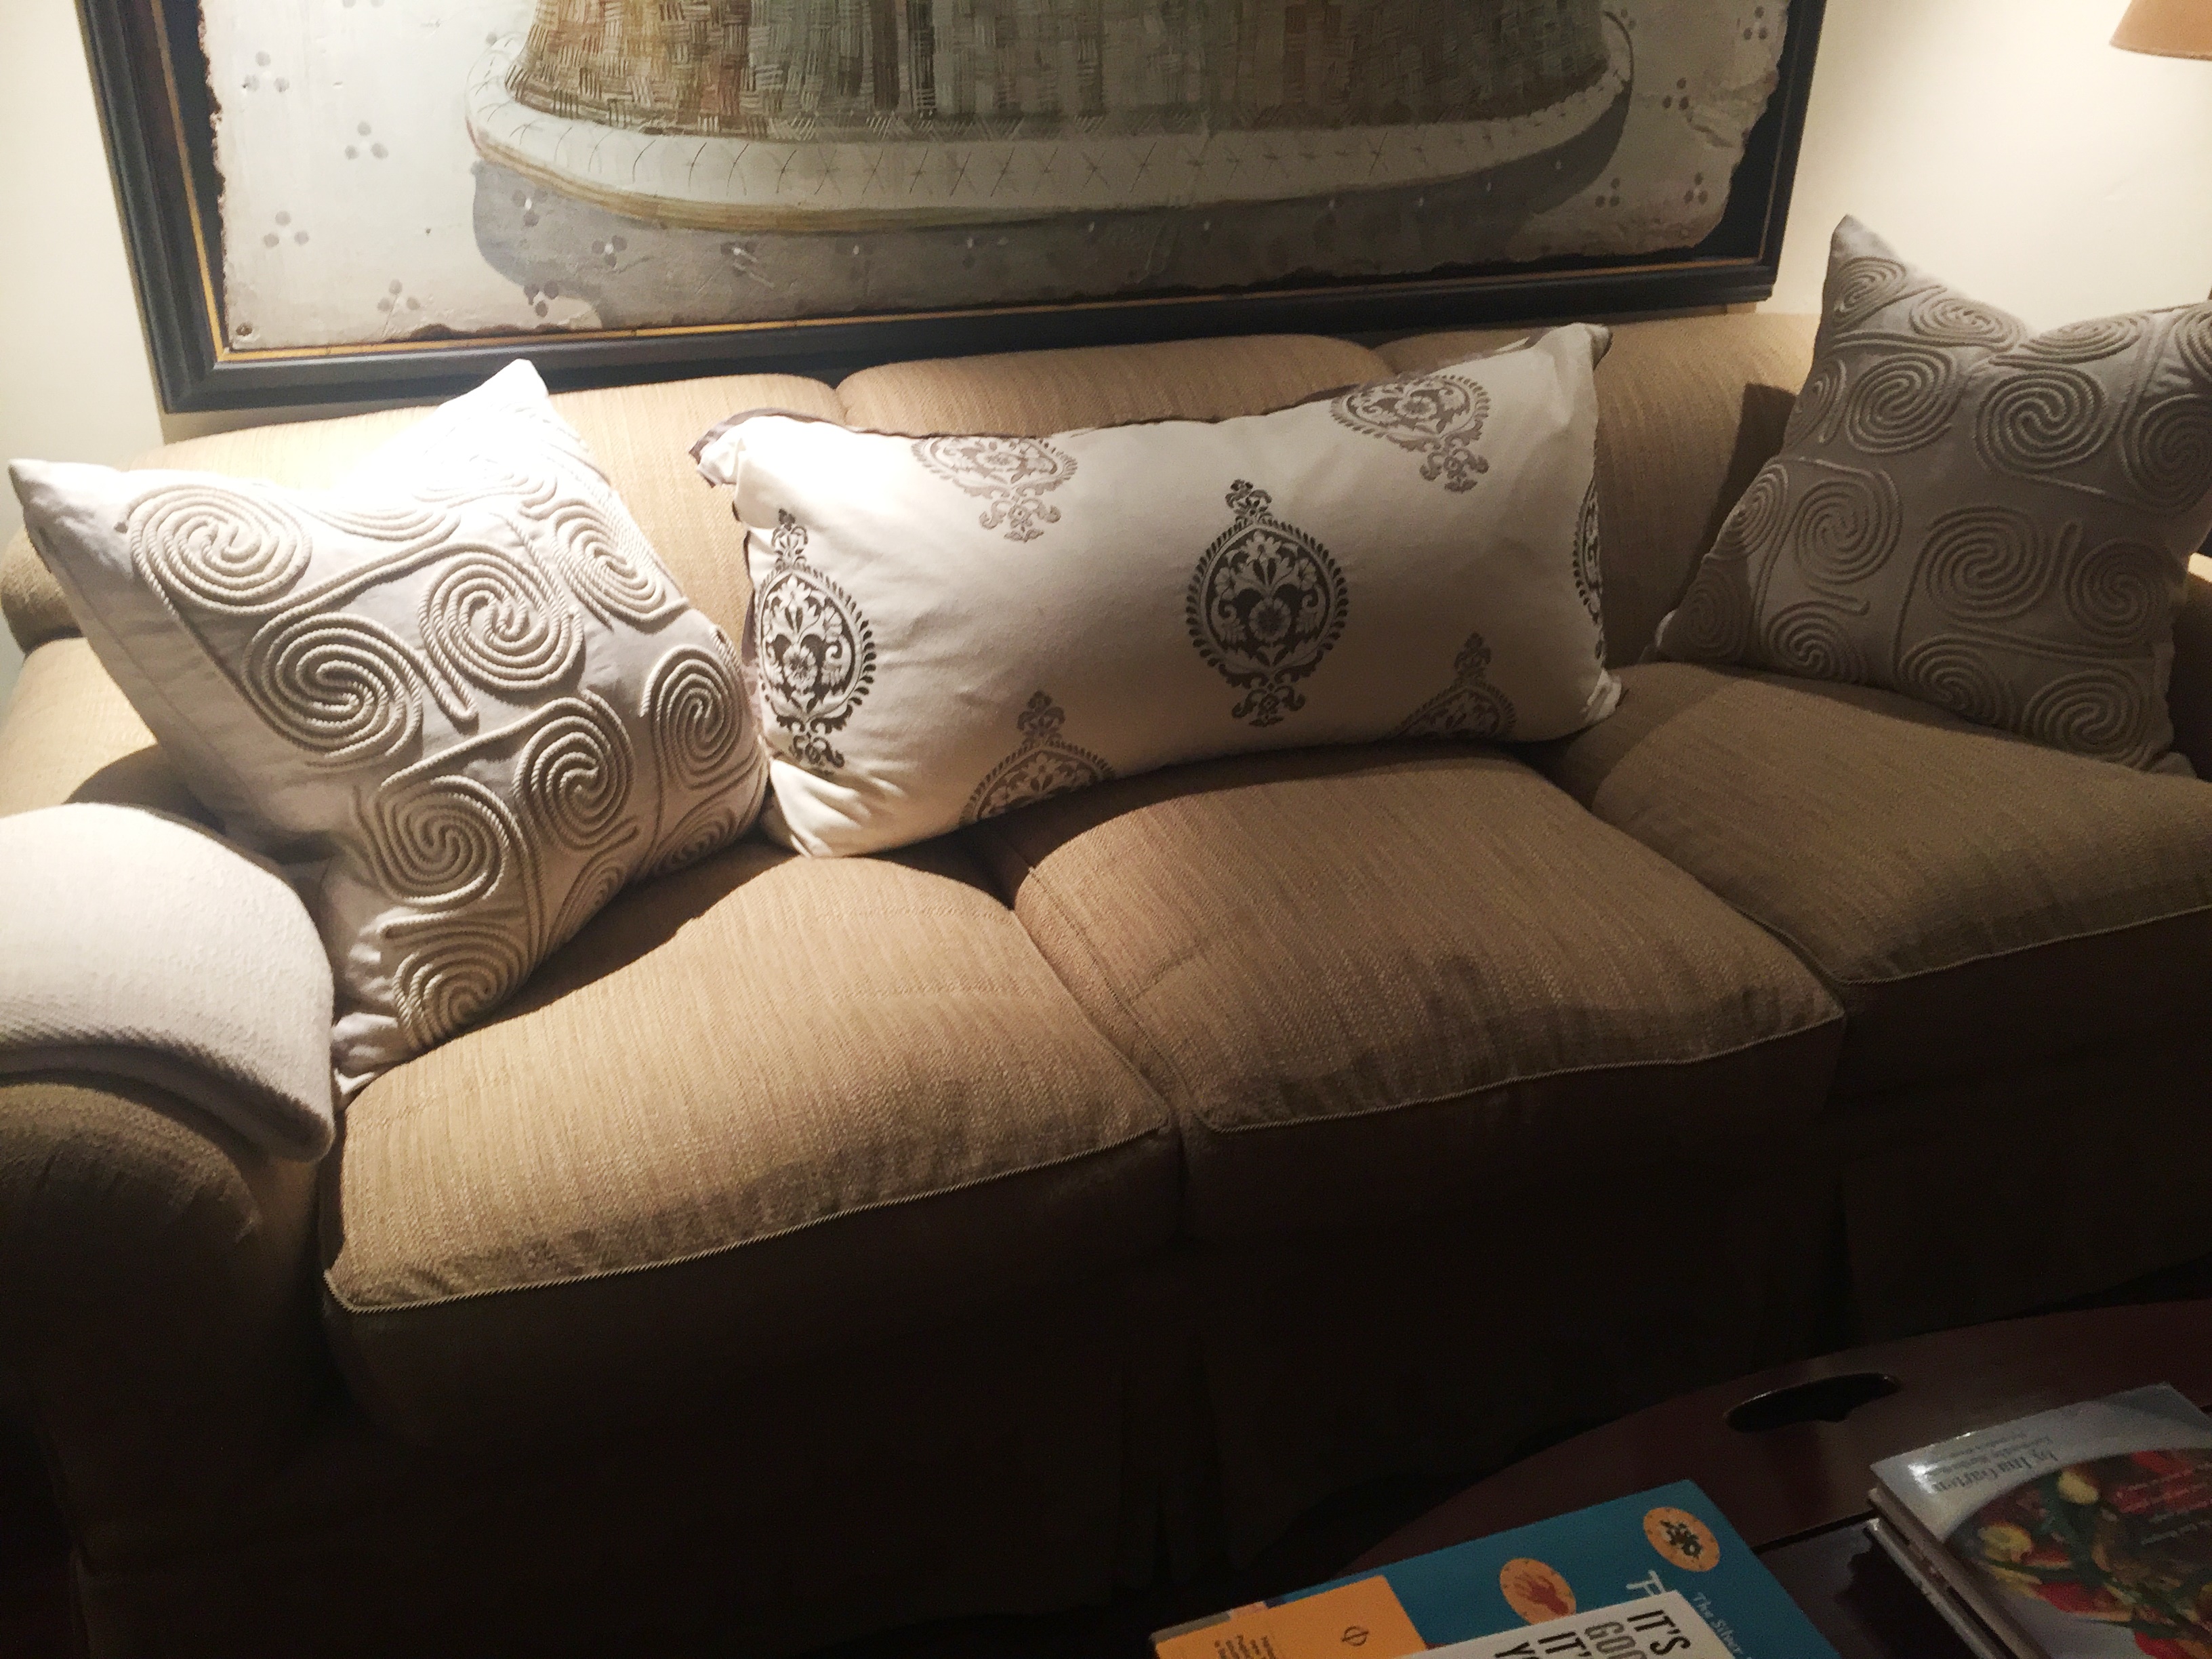 Circle pillow on sofa corrected